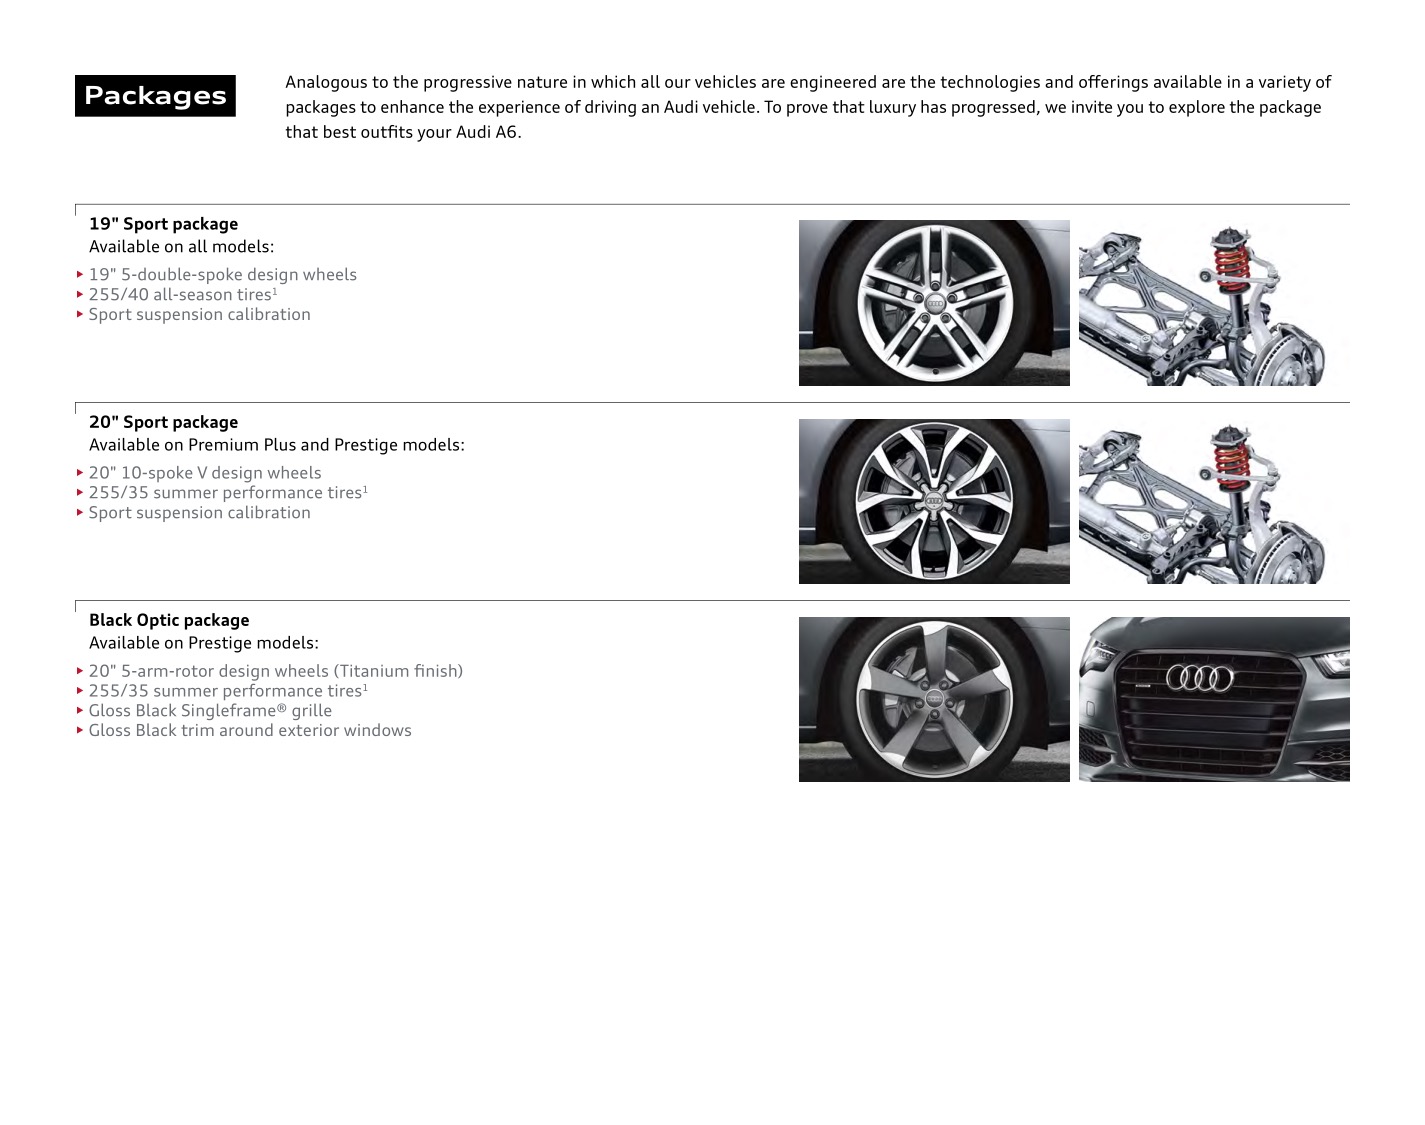 2015 Audi A6 Brochure Page 8